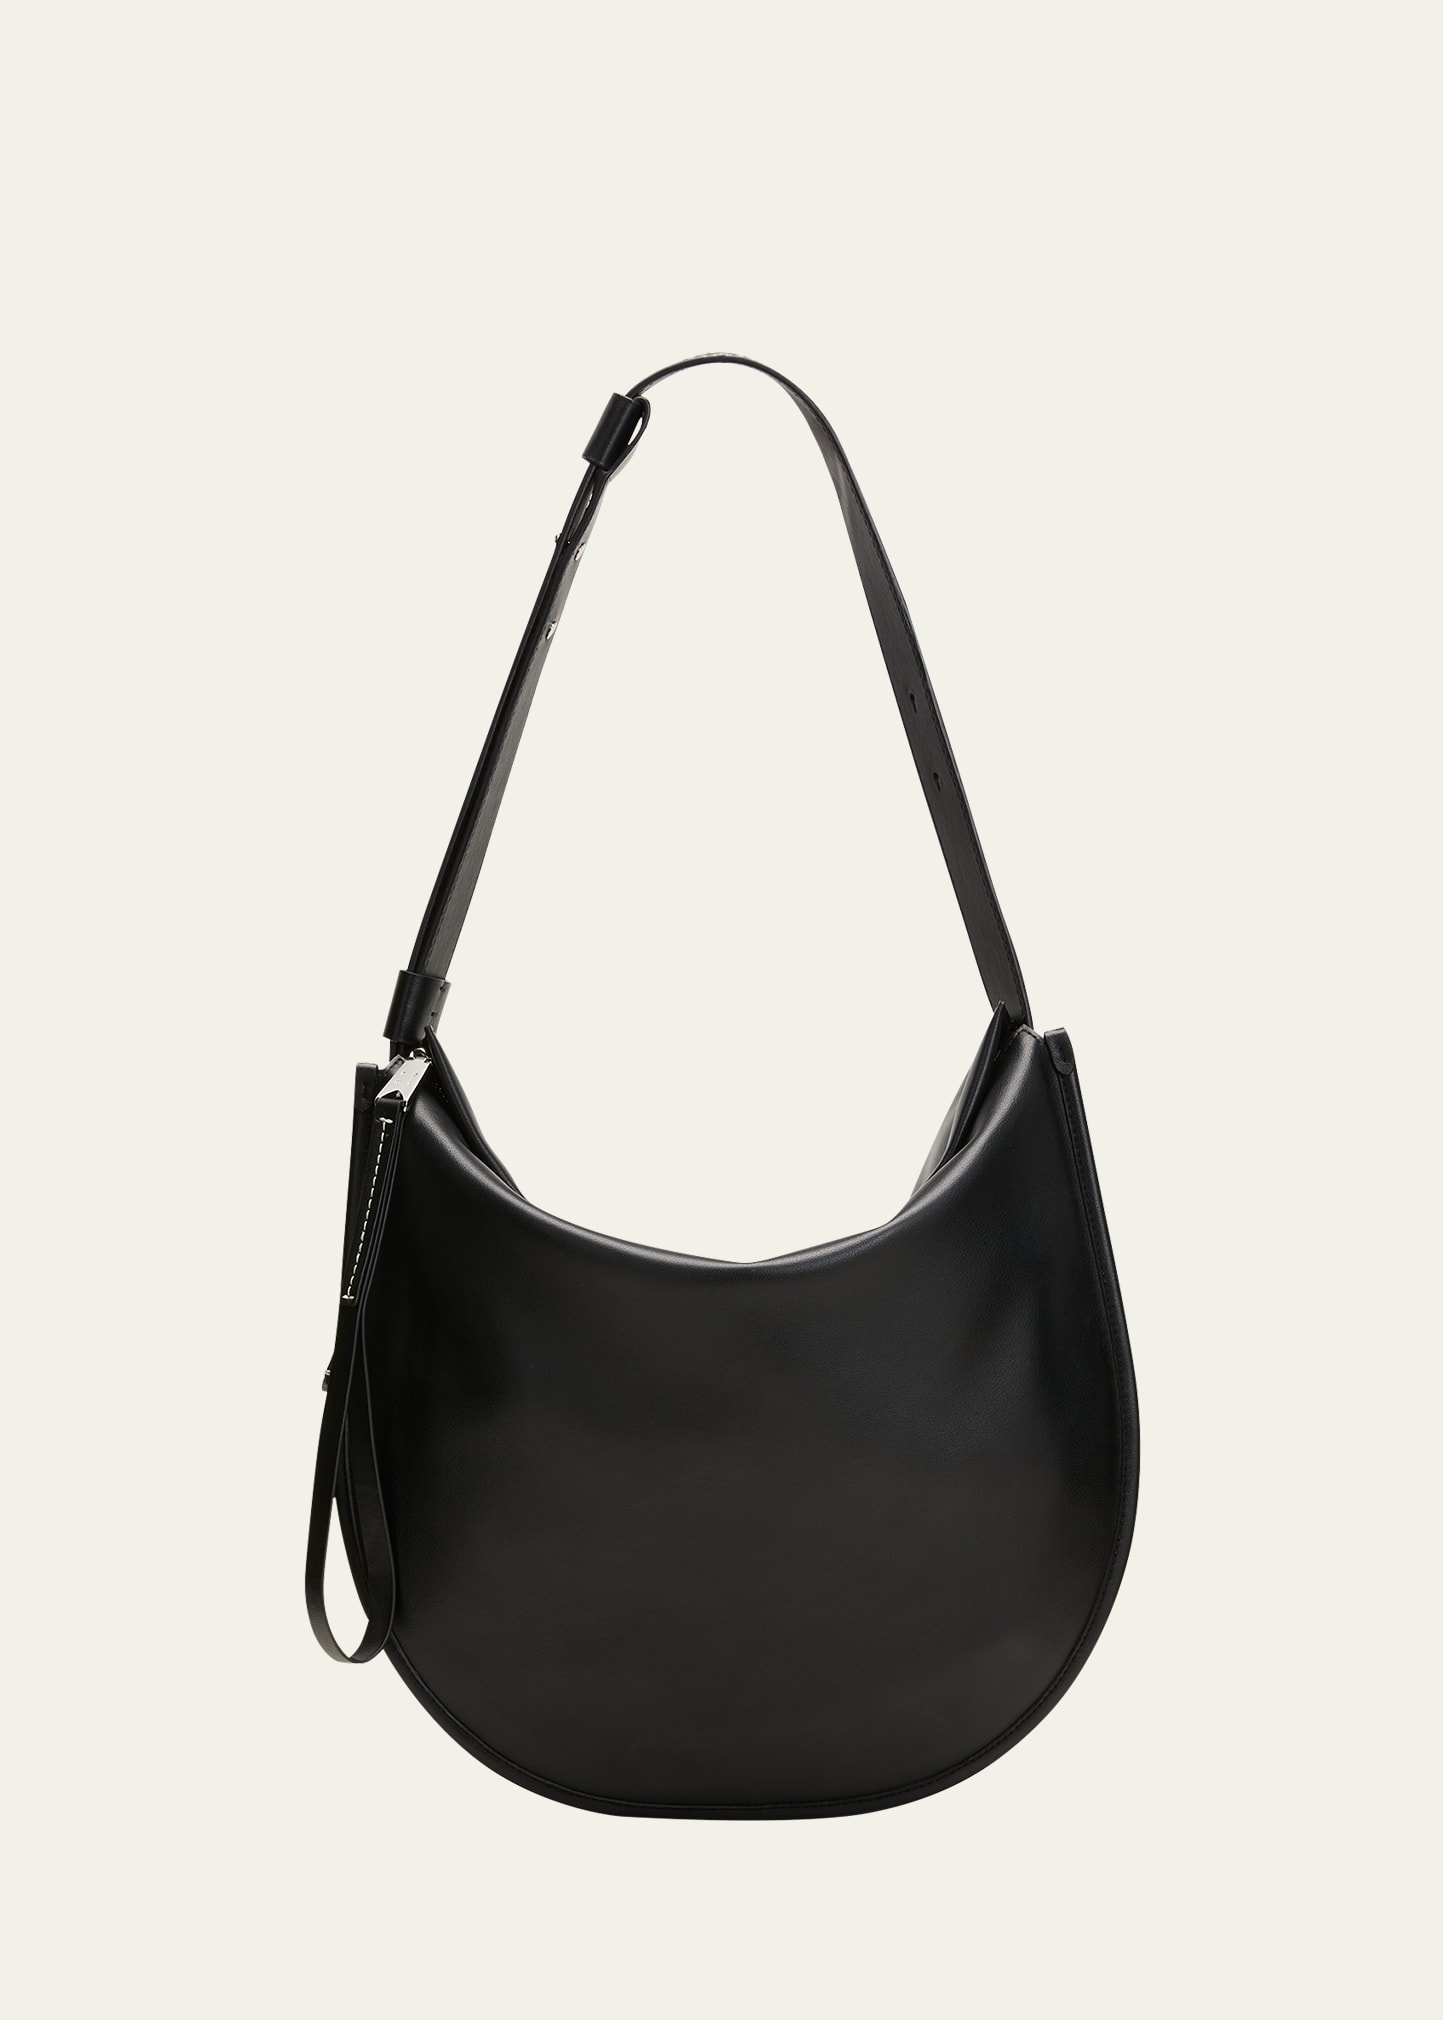 Proenza Schouler White Label Baxter Zip Leather Hobo Bag In Black